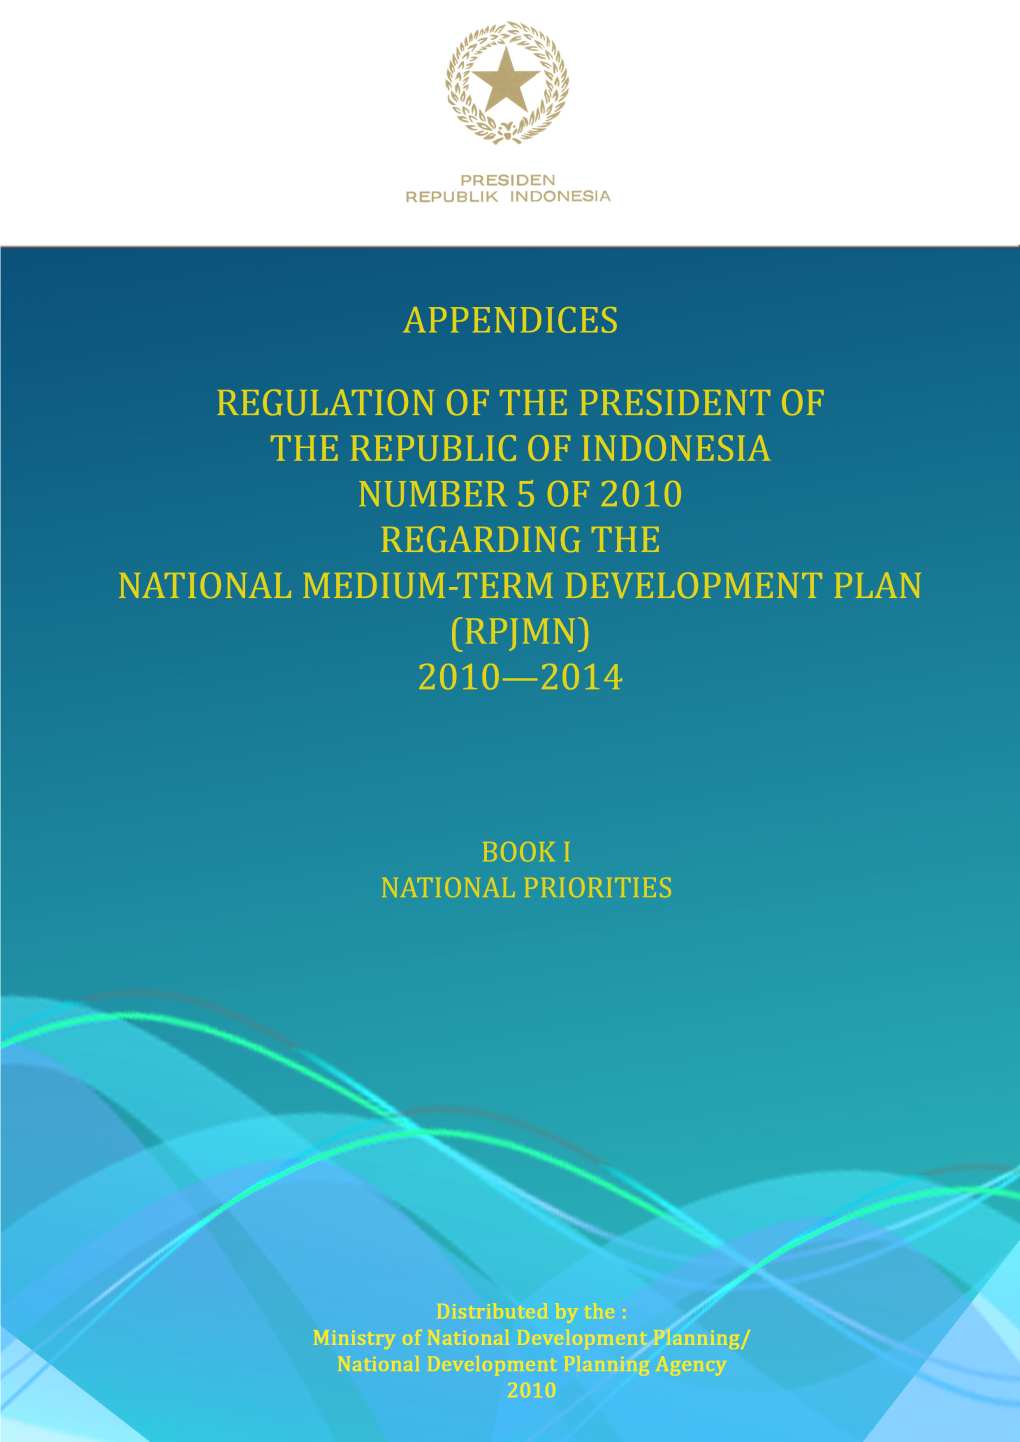 National Medium-Term Development Plan